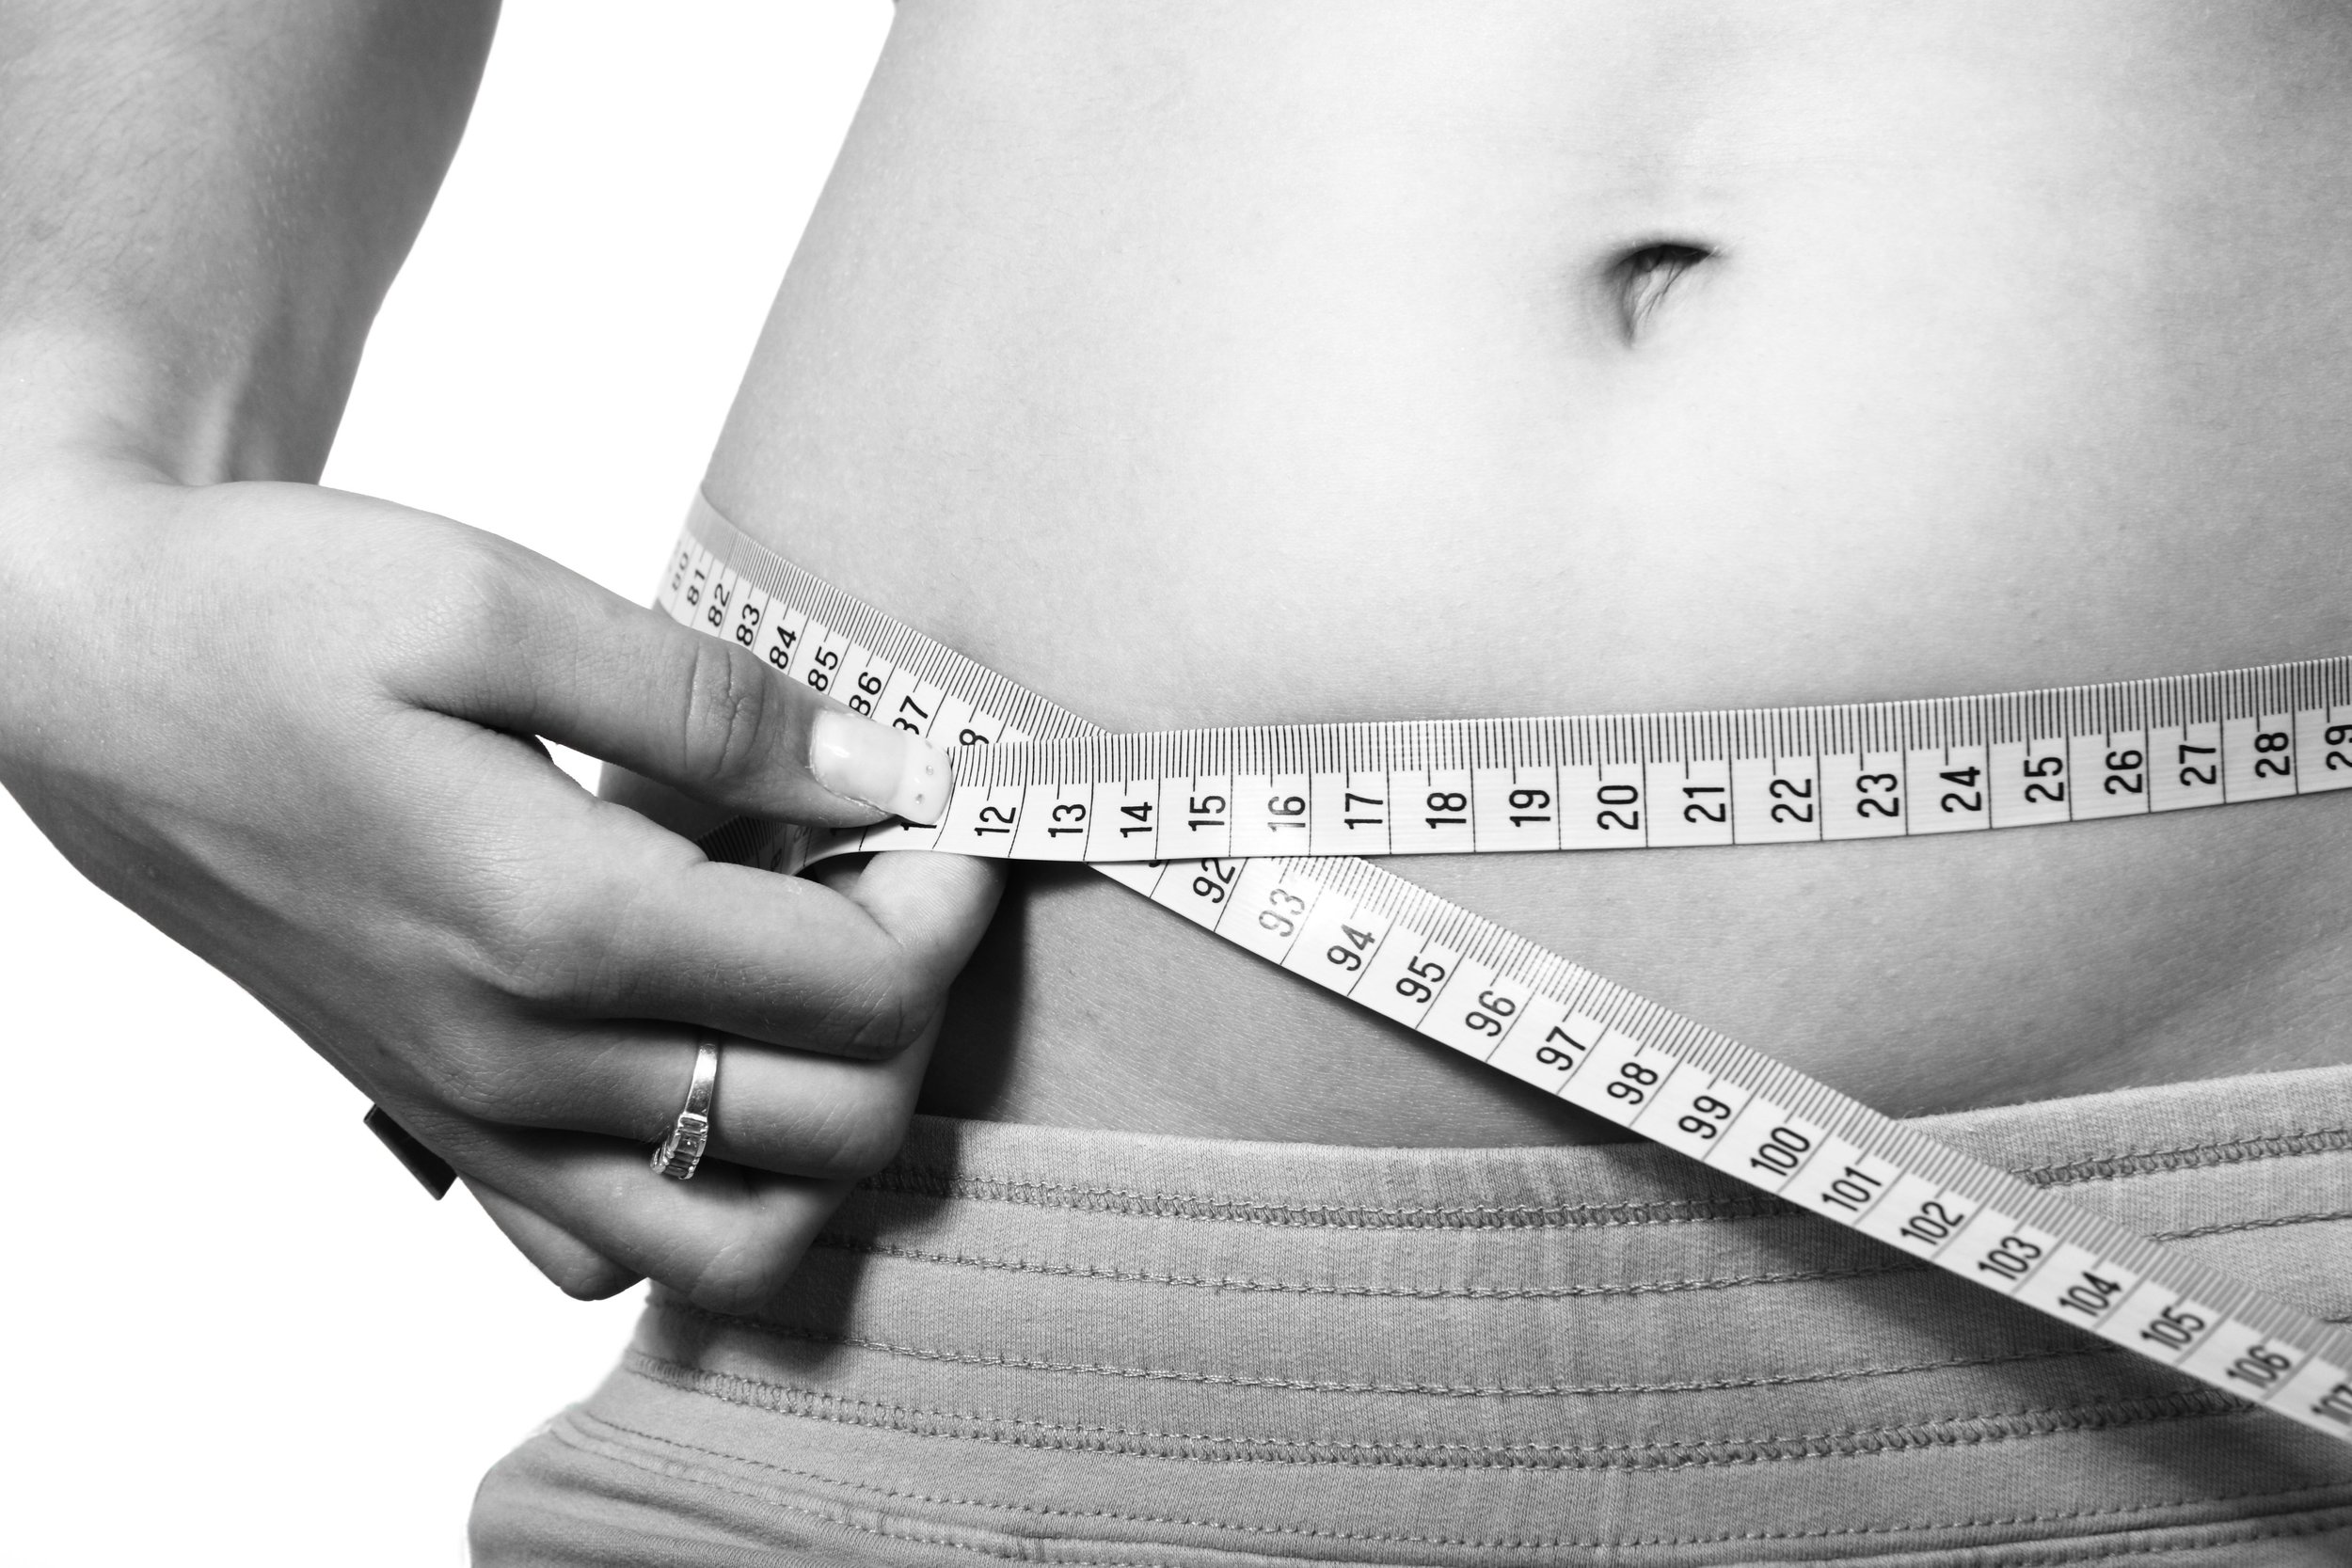 Body Fat Percentage Photos of Men & Women - BuiltLean